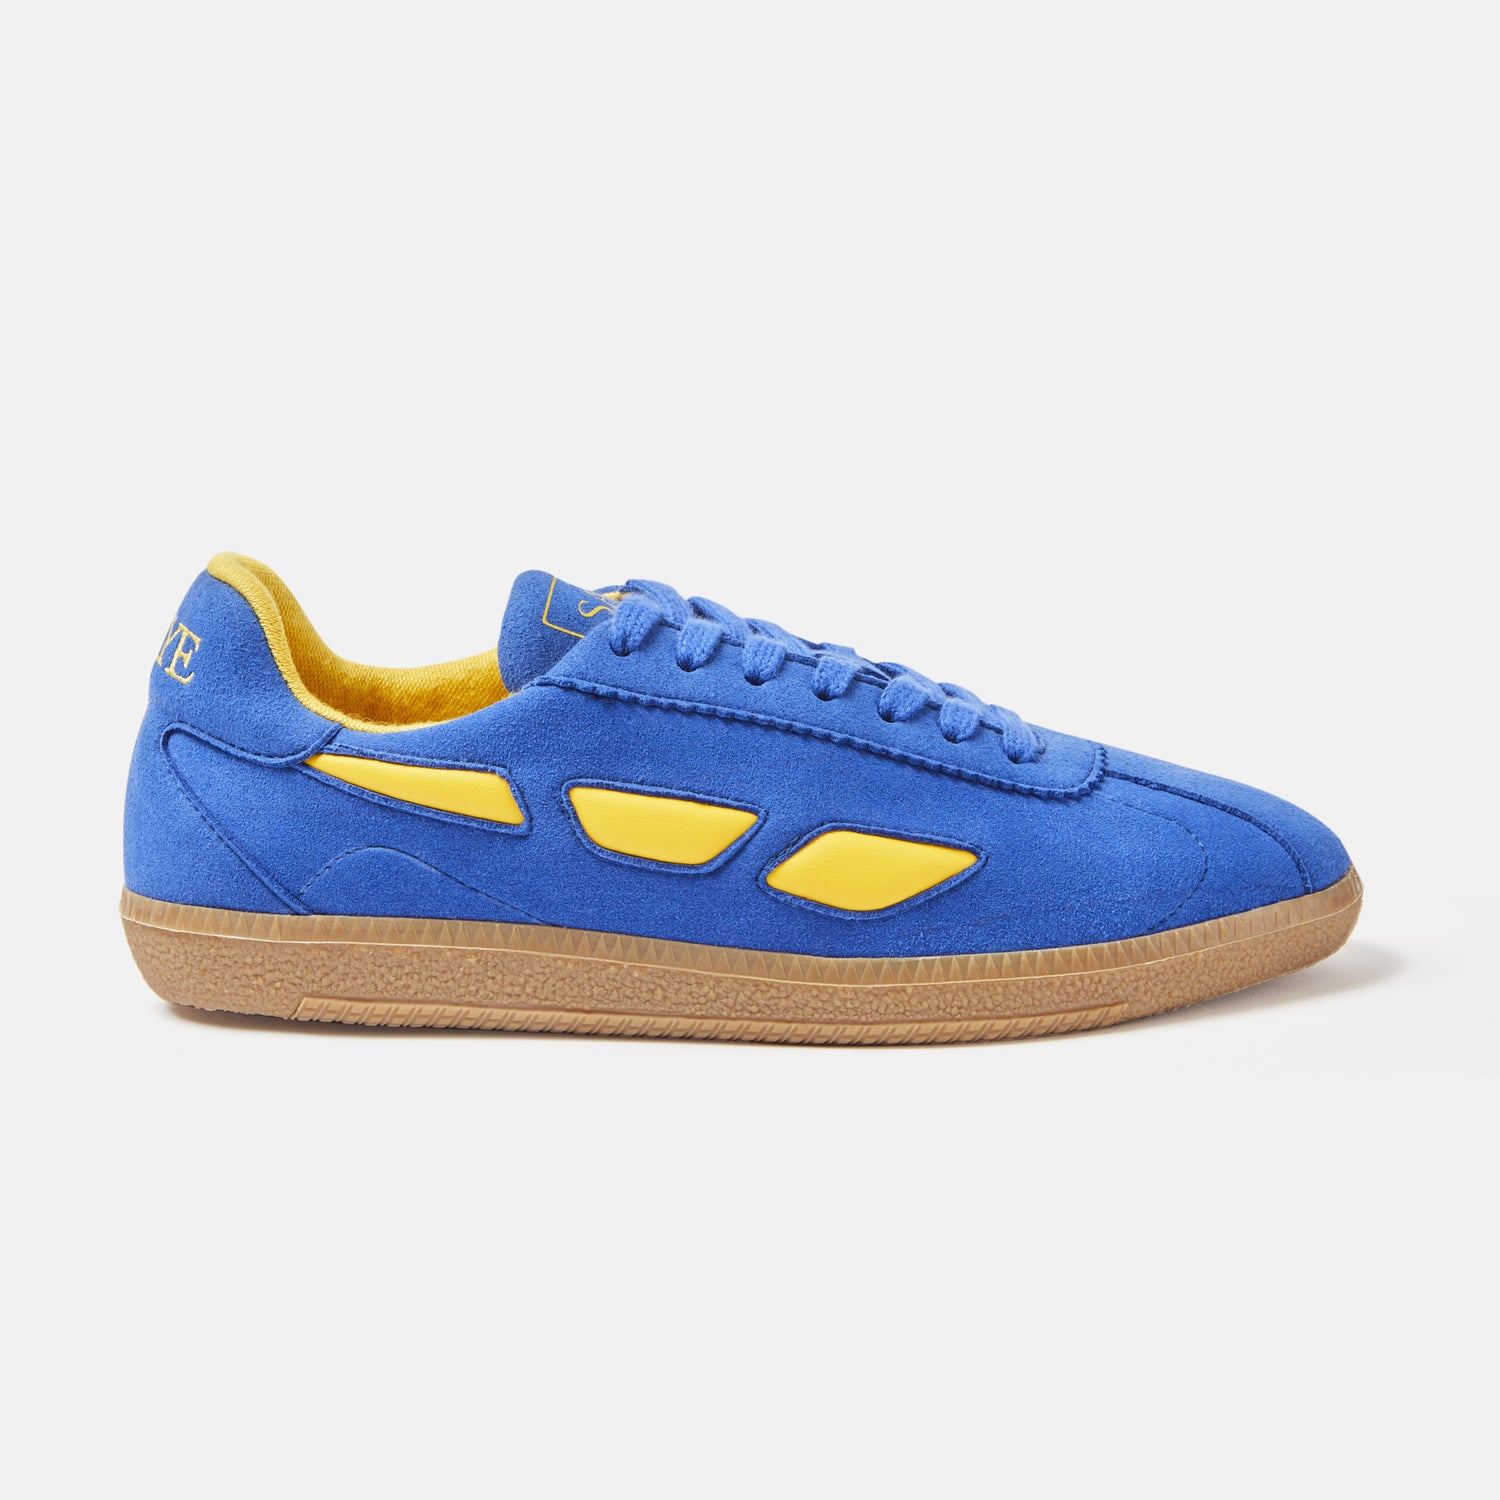 Modelo '70 Blue Vegan Sneakers - SAYE